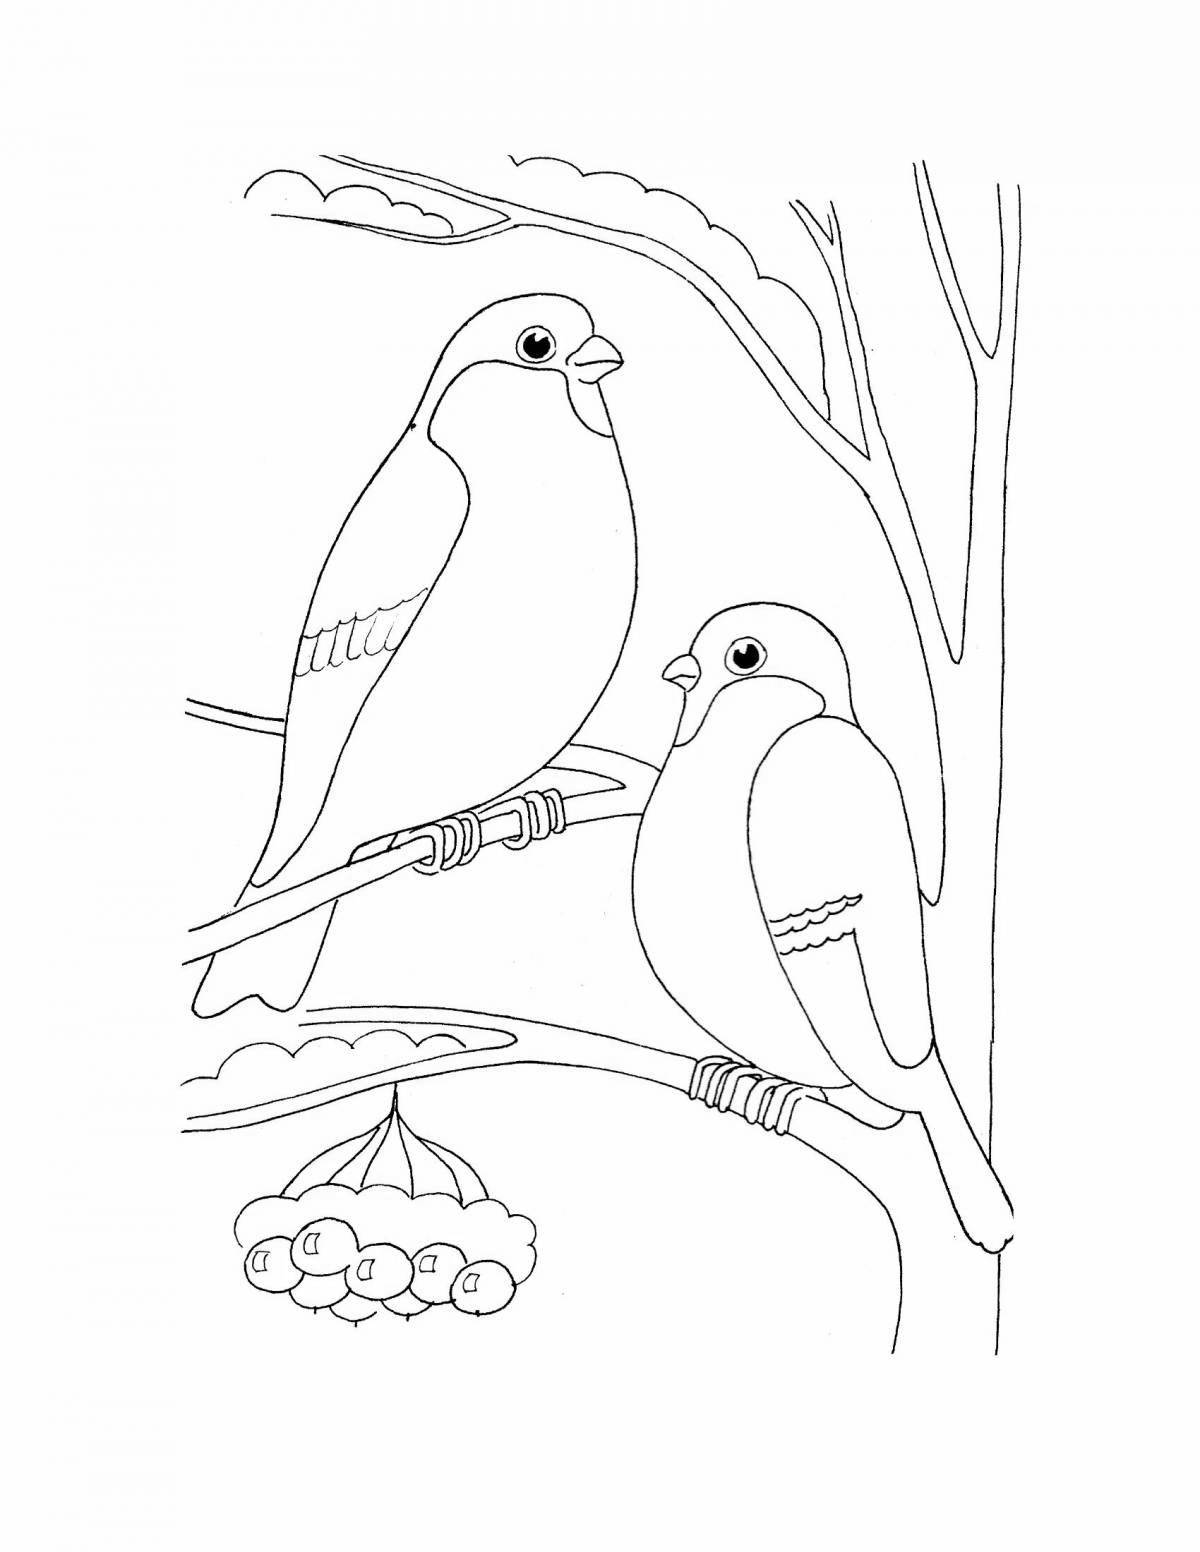 Exquisite winter birds coloring book